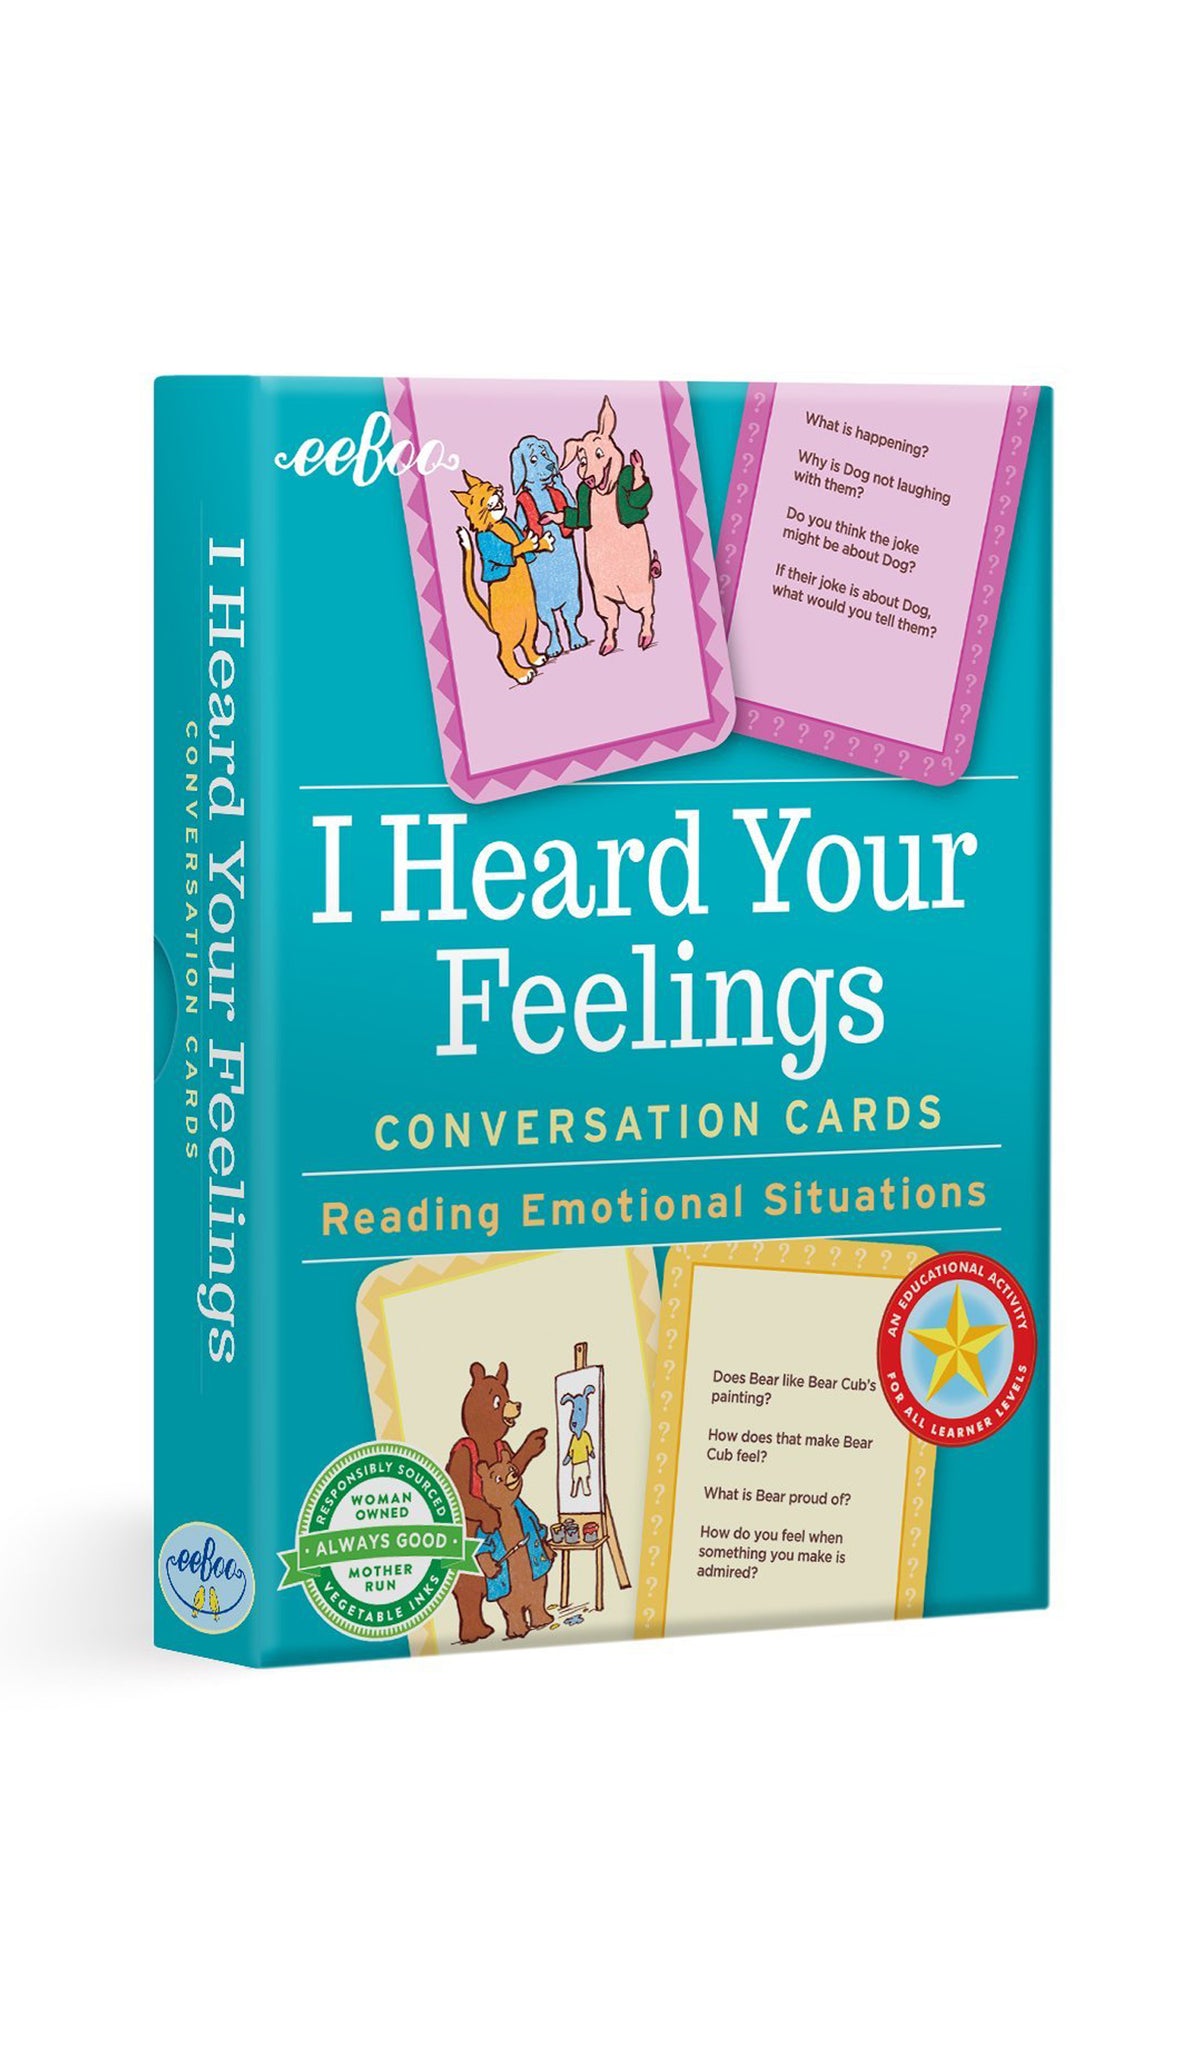 I HEARD YOUR FEELINGS CONVERSATION CARDS